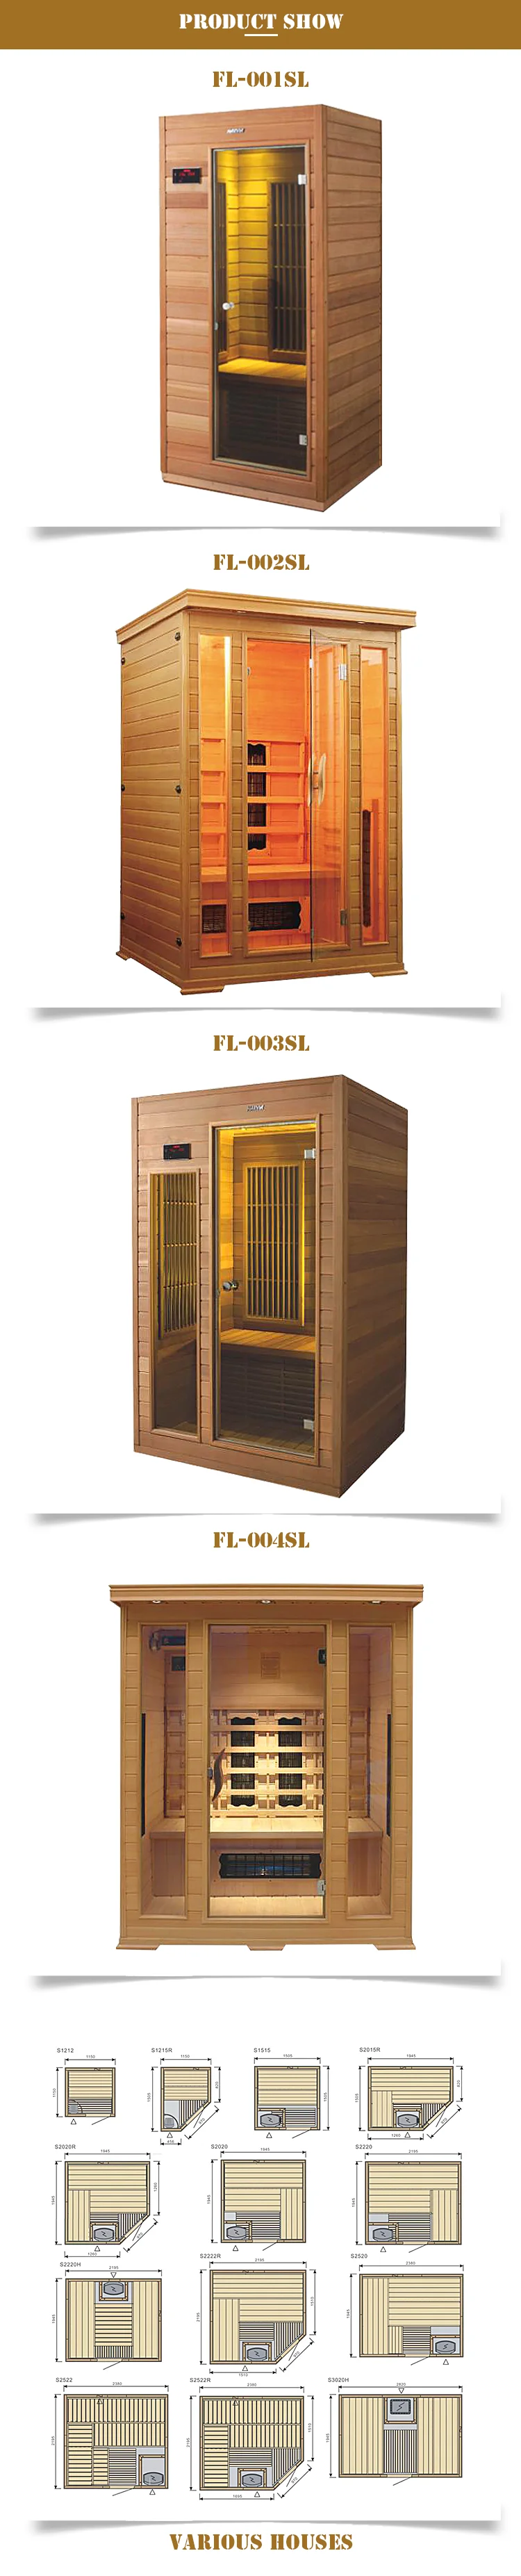 sauna house outdoor far infrared sauna cabin hemlock dry steam sauna with led light